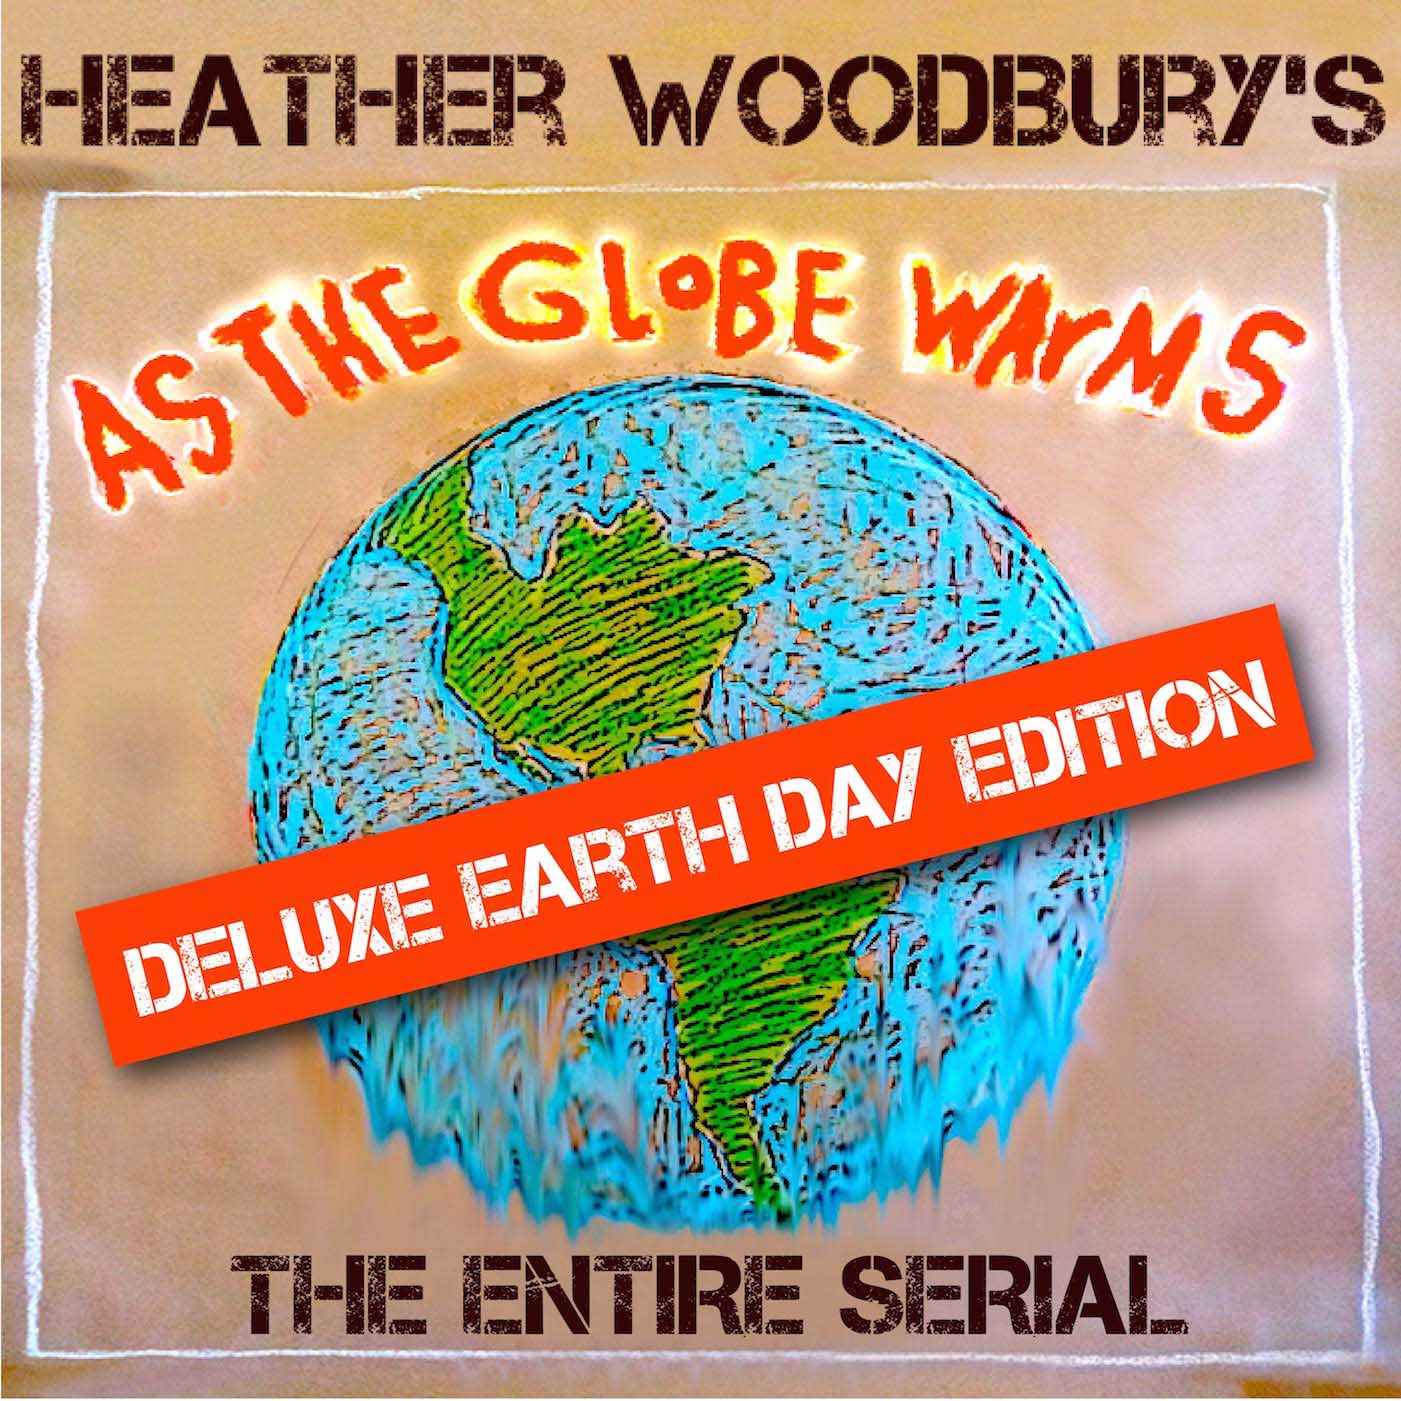 Heather Woodbury's AS THE GLOBE WARMS